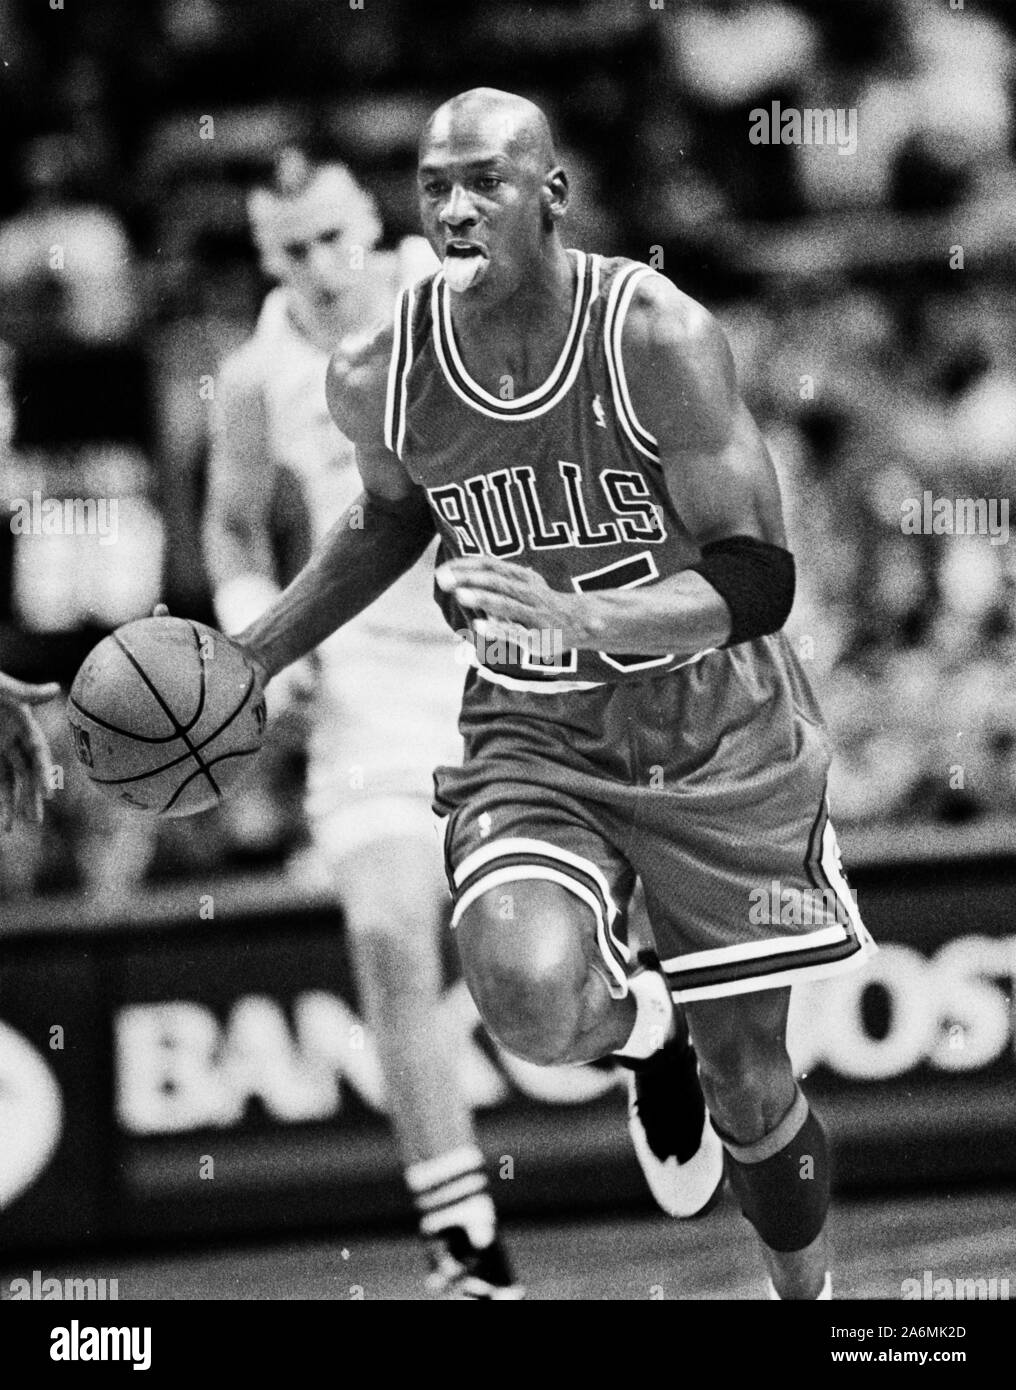 1995 Michael Jordan Chicago Bulls vs les Celtics Bosotn au Boston Garden Boston MA USA photo de Bill belknap Banque D'Images